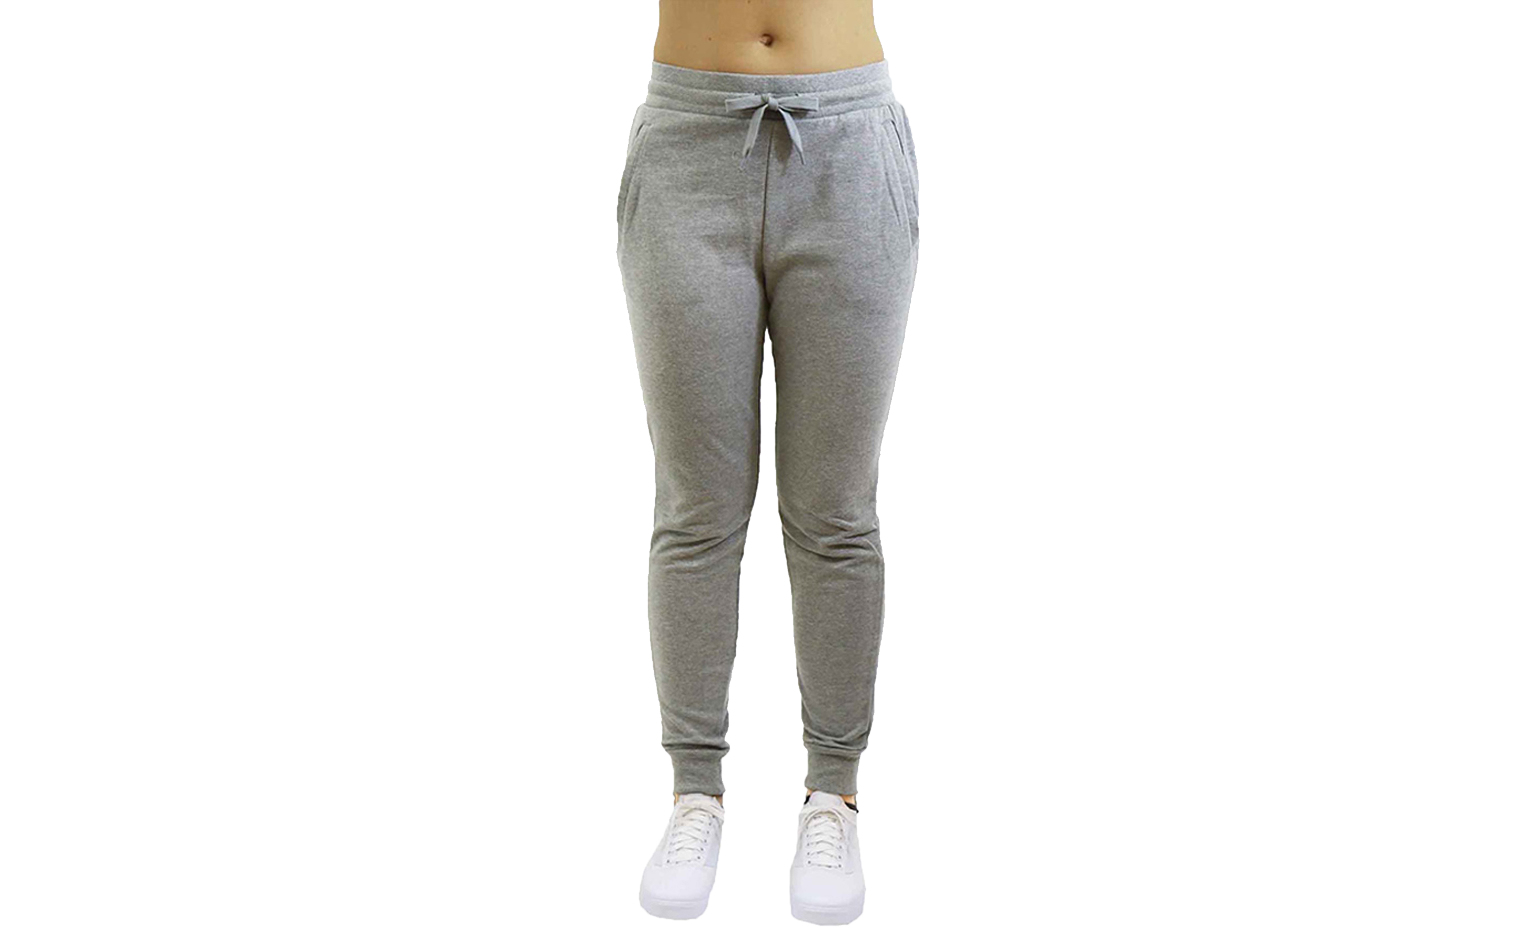 Wholesale Women's Sweatpants - S-2X, Grey, Fleece - DollarDays